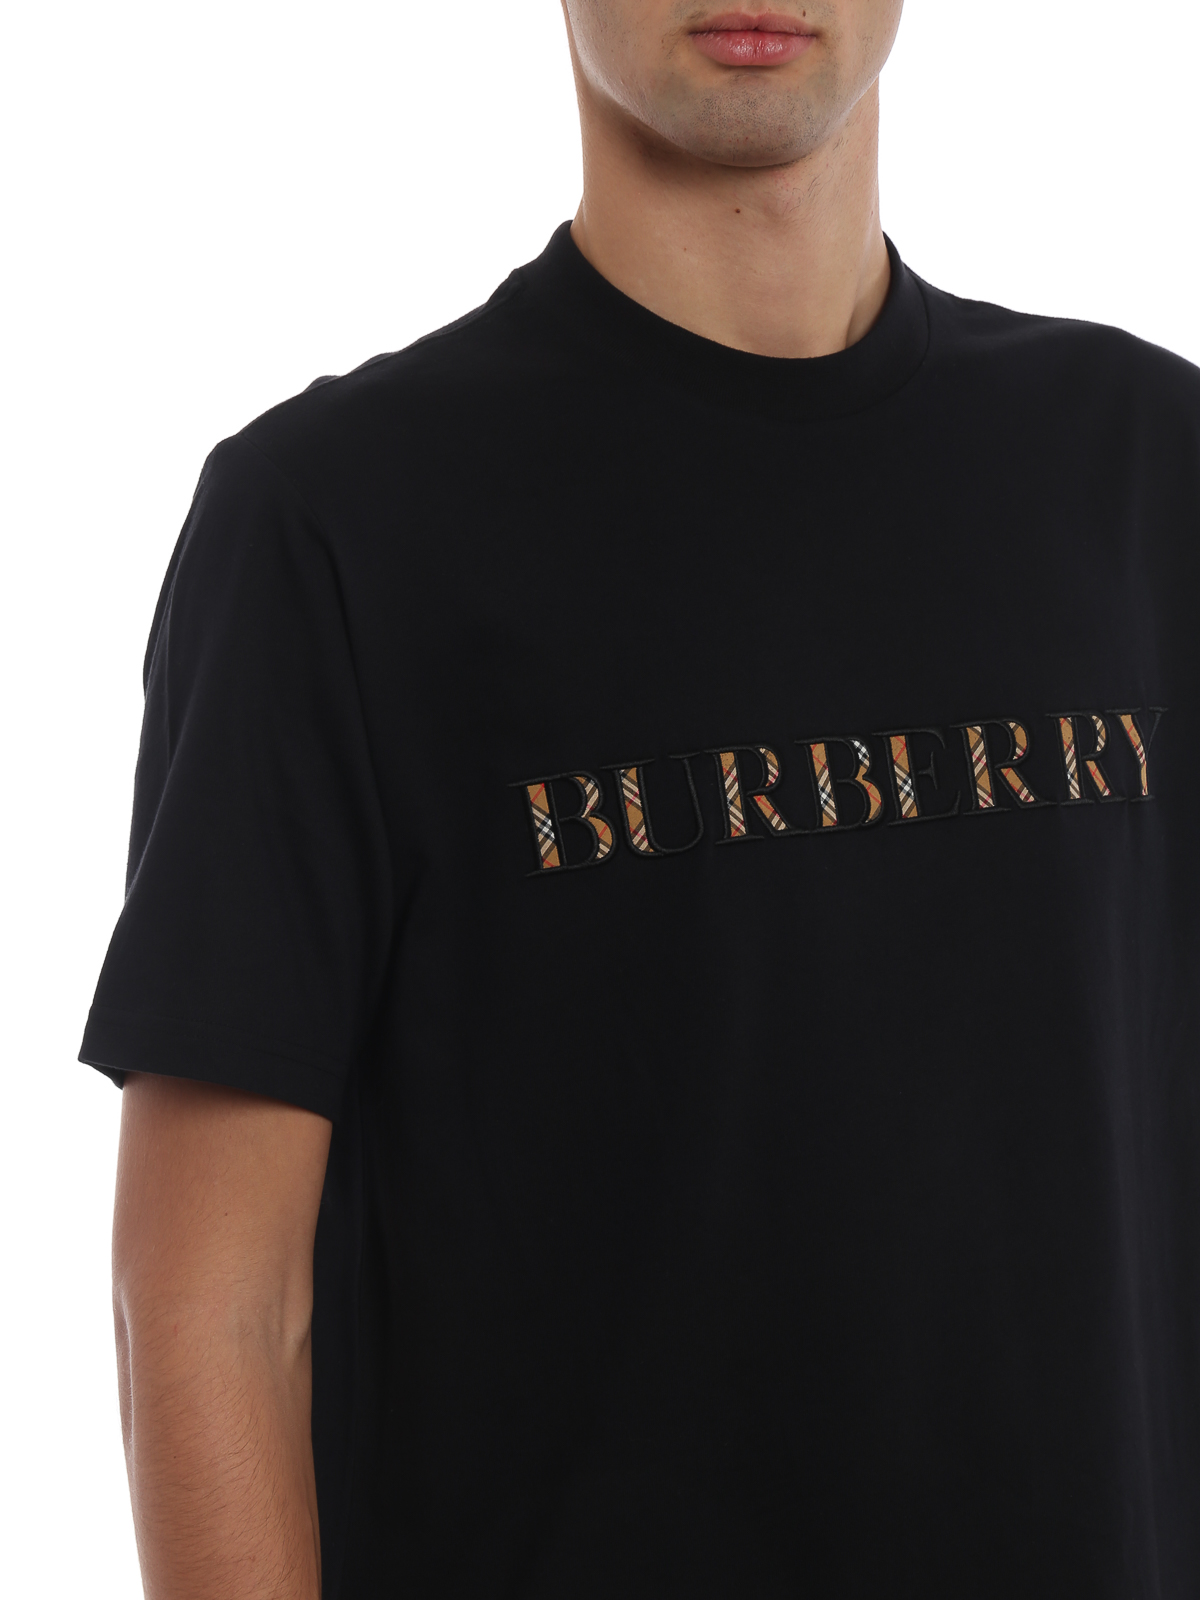 T-shirts Burberry - Sabeto black cotton T-shirt with checked logo - 8007819